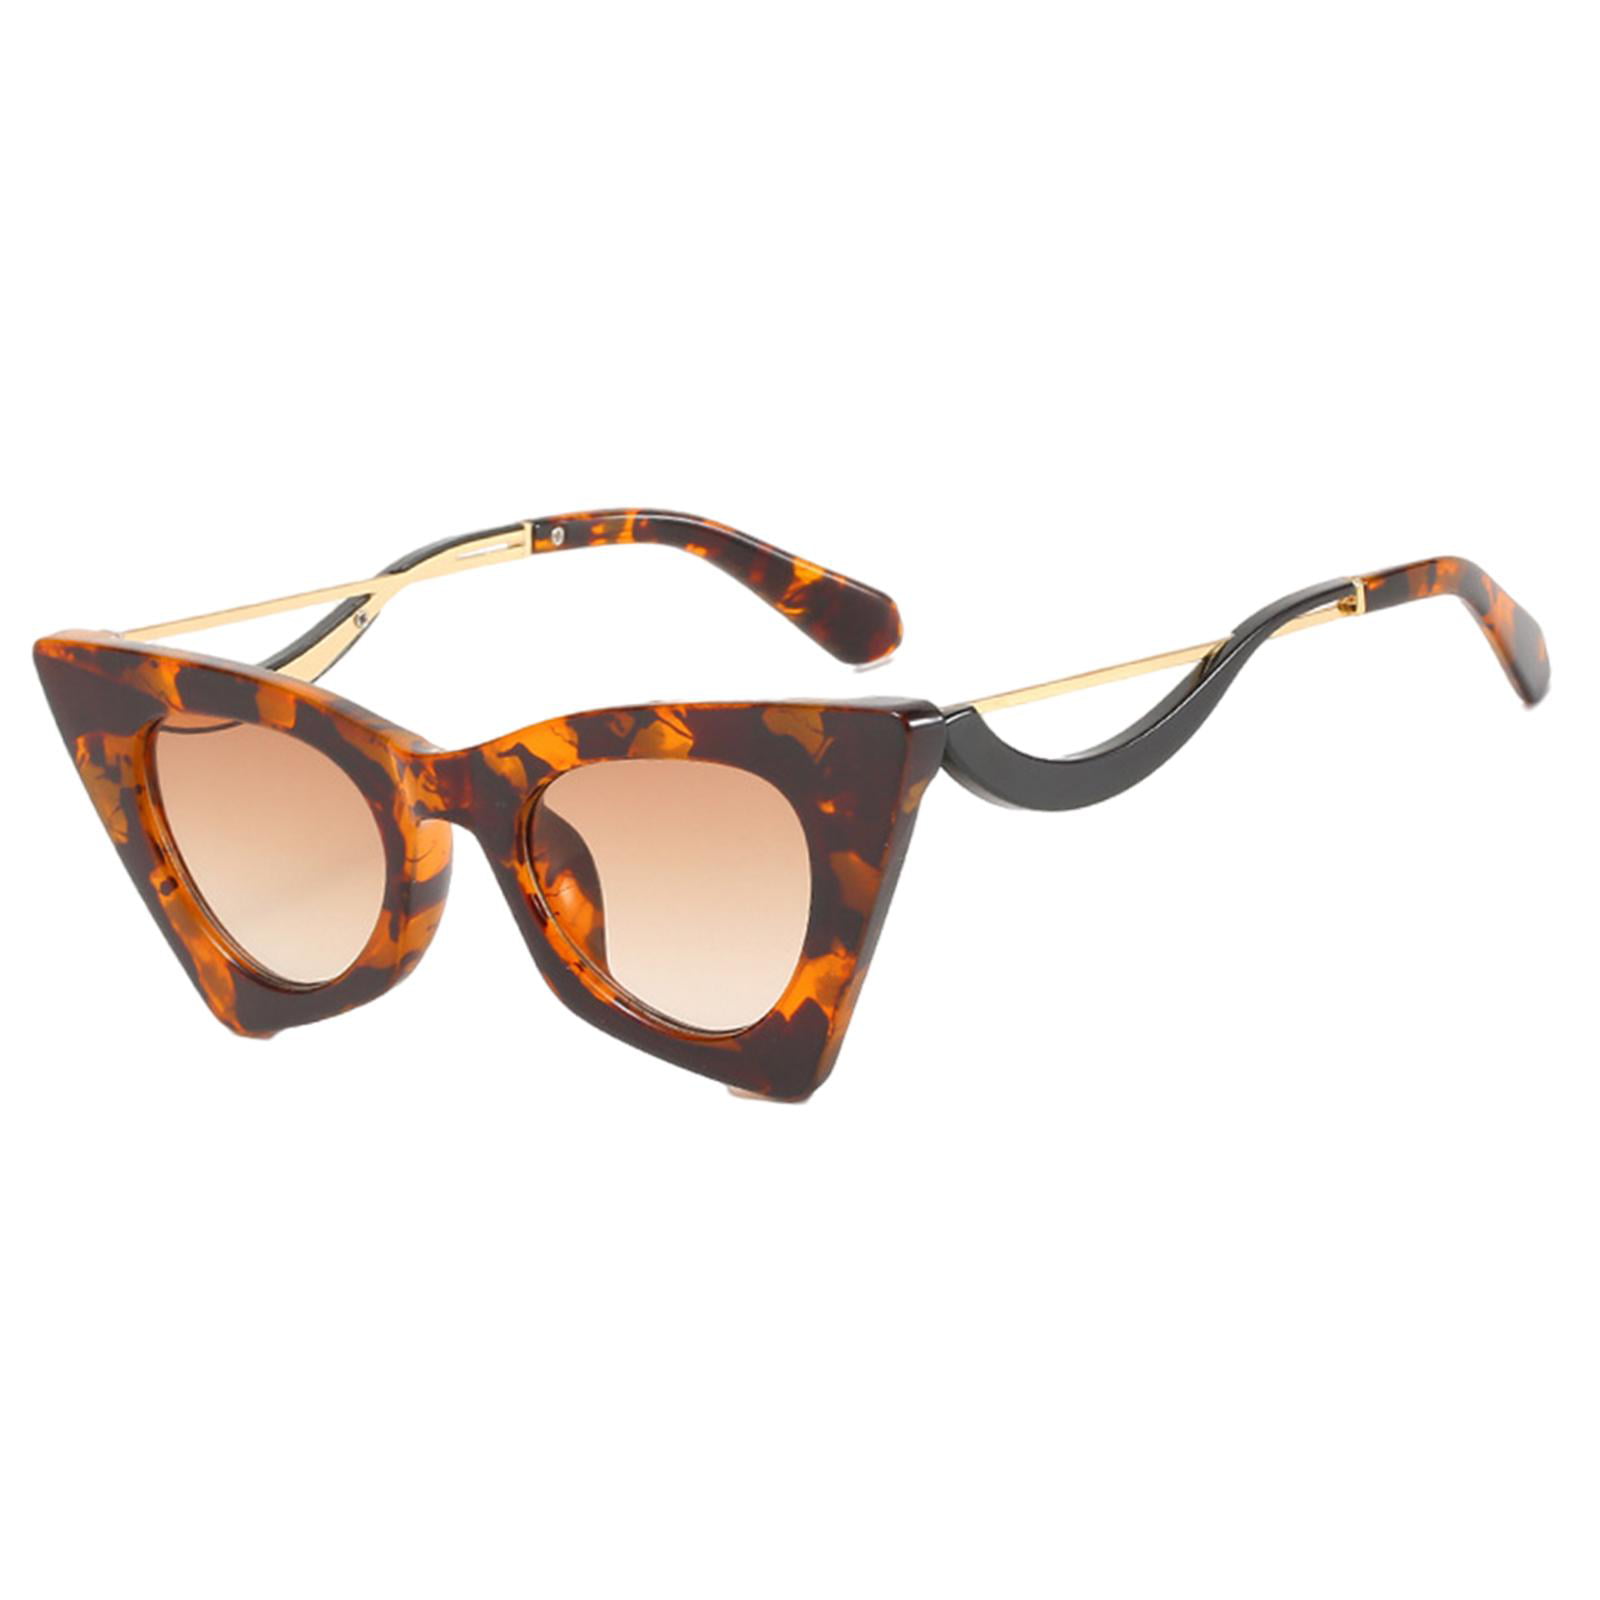 VTG Style Oversized Bug Eye Celeb Sunglasses UV400 Black/Tortoiseshell Stylish 